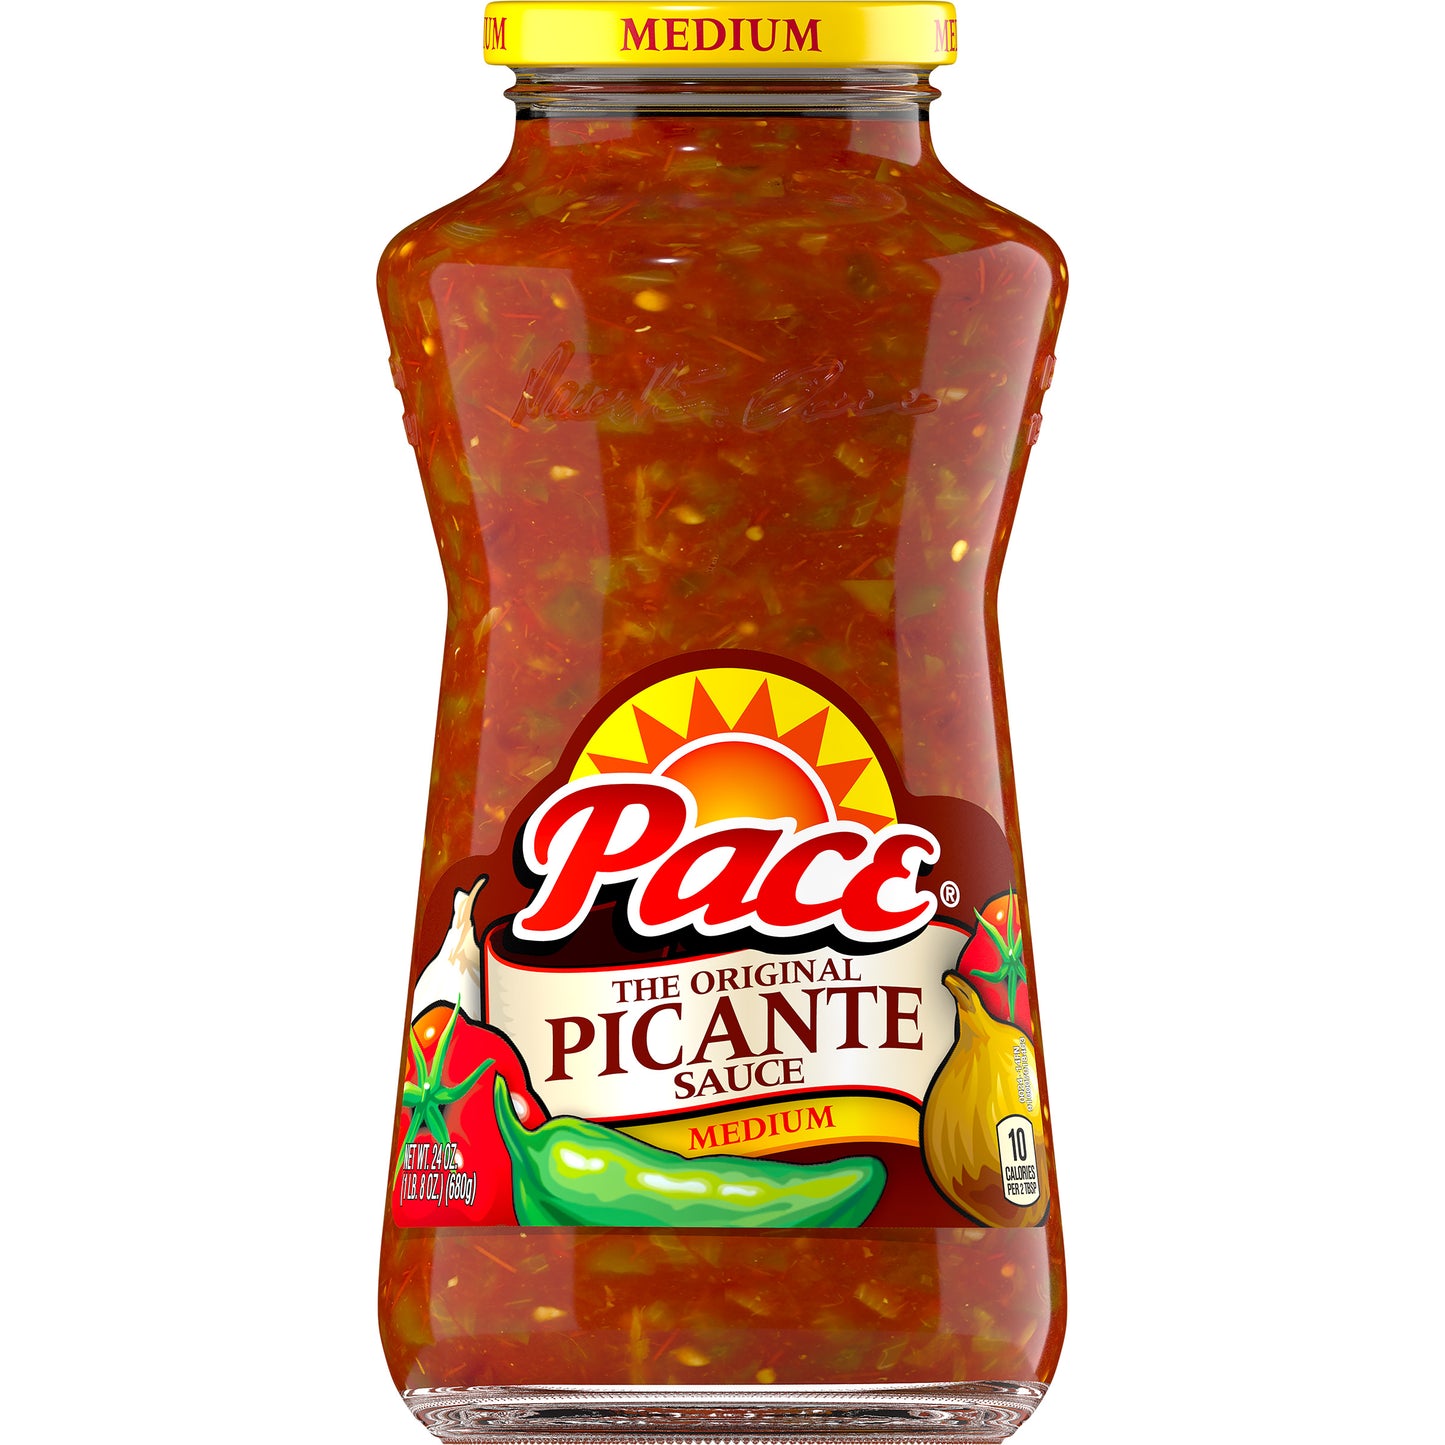 Pace Medium Picante Sauce, 24 oz.